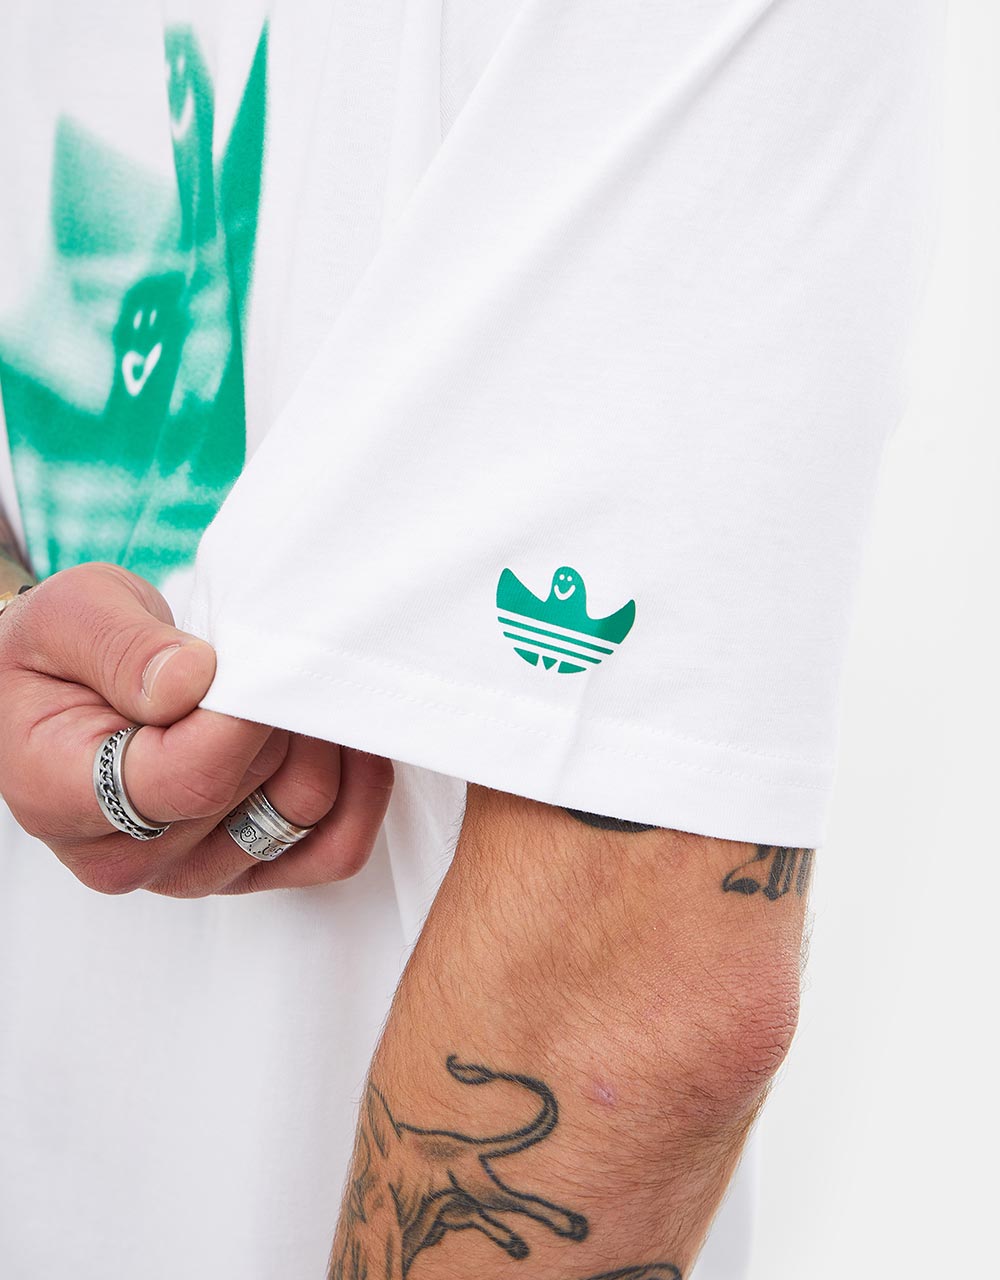 adidas Shmoo Logo T-Shirt - White/Court Green